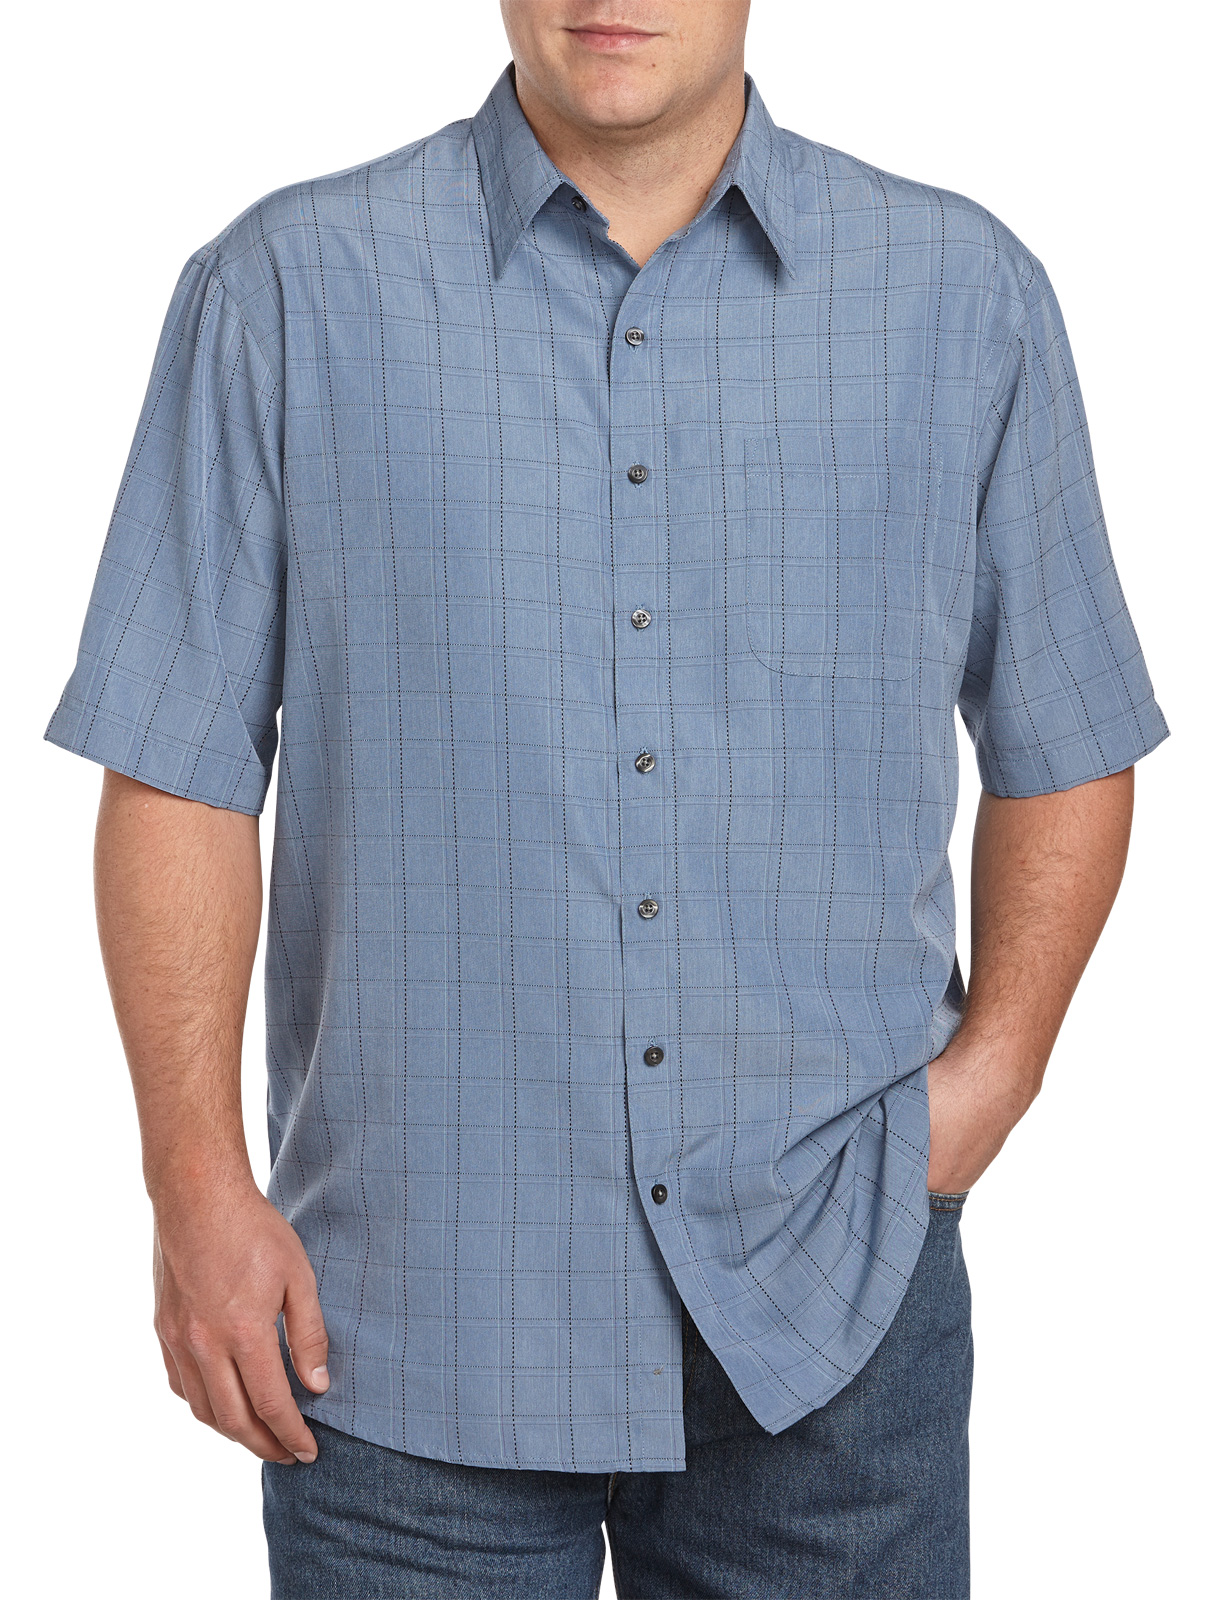 Harbor Bay Men's Big and Tall Patterned Microfiber Sport Shirt